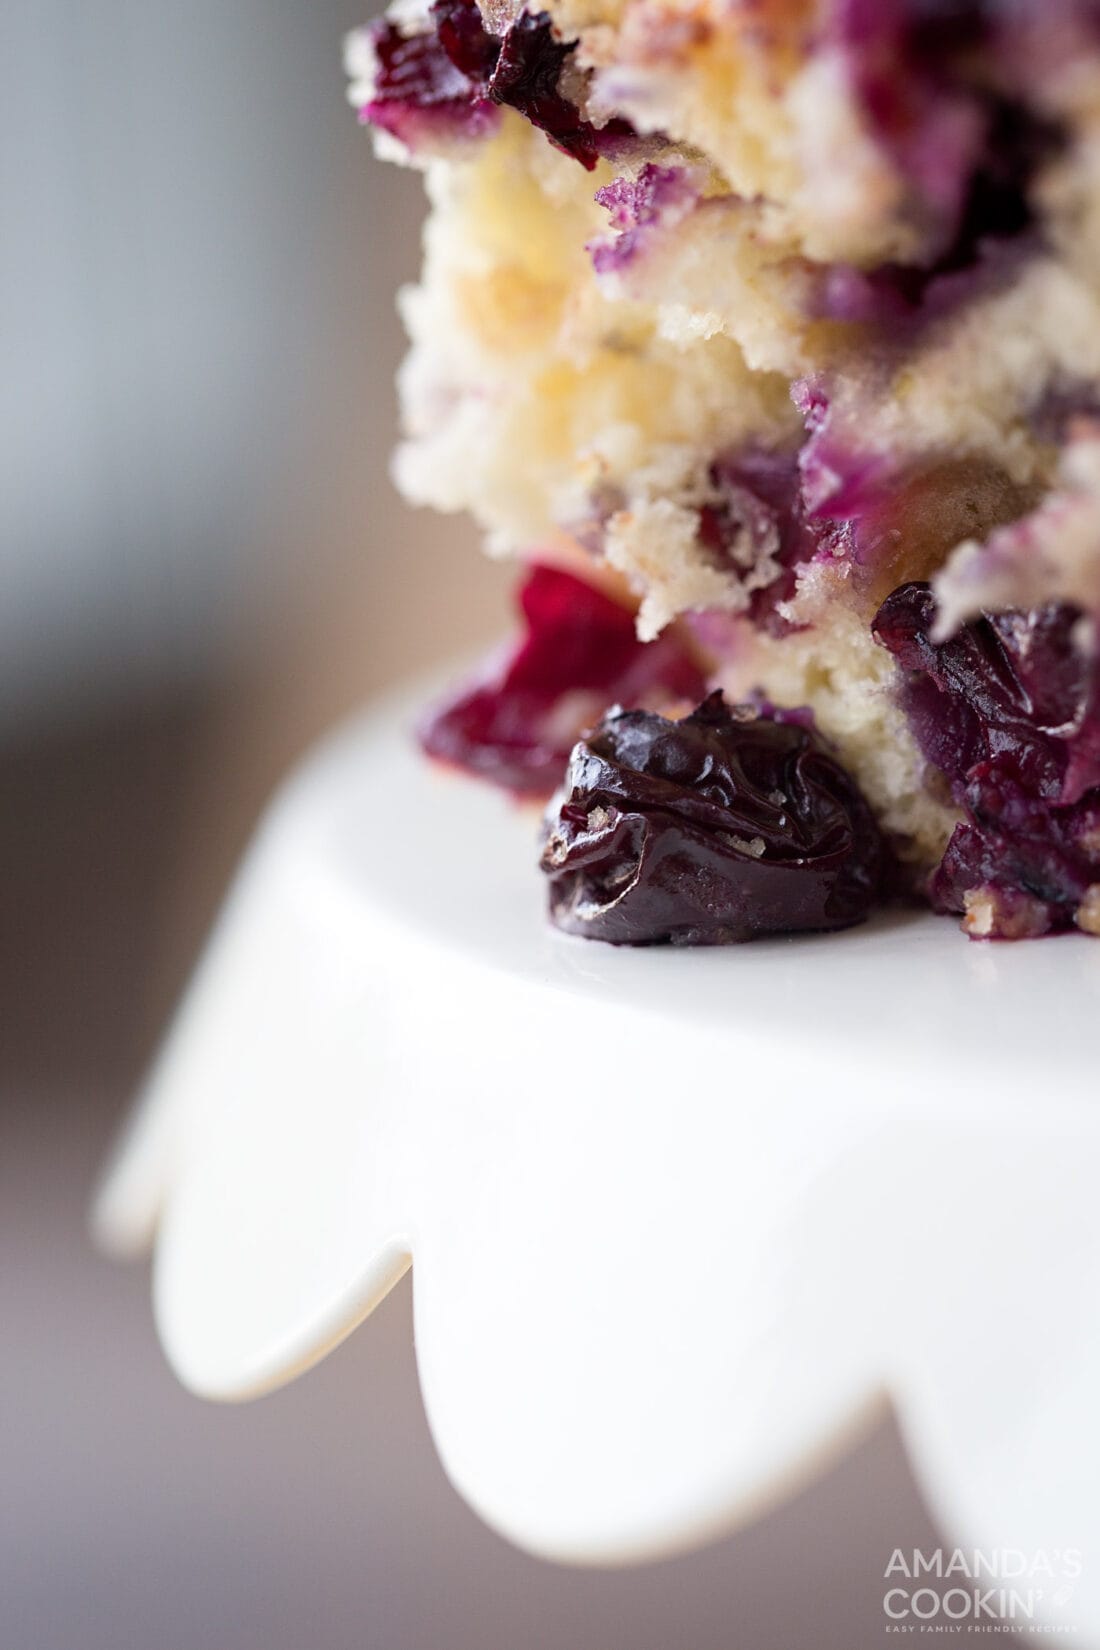 extreme closeup of blueberry cake